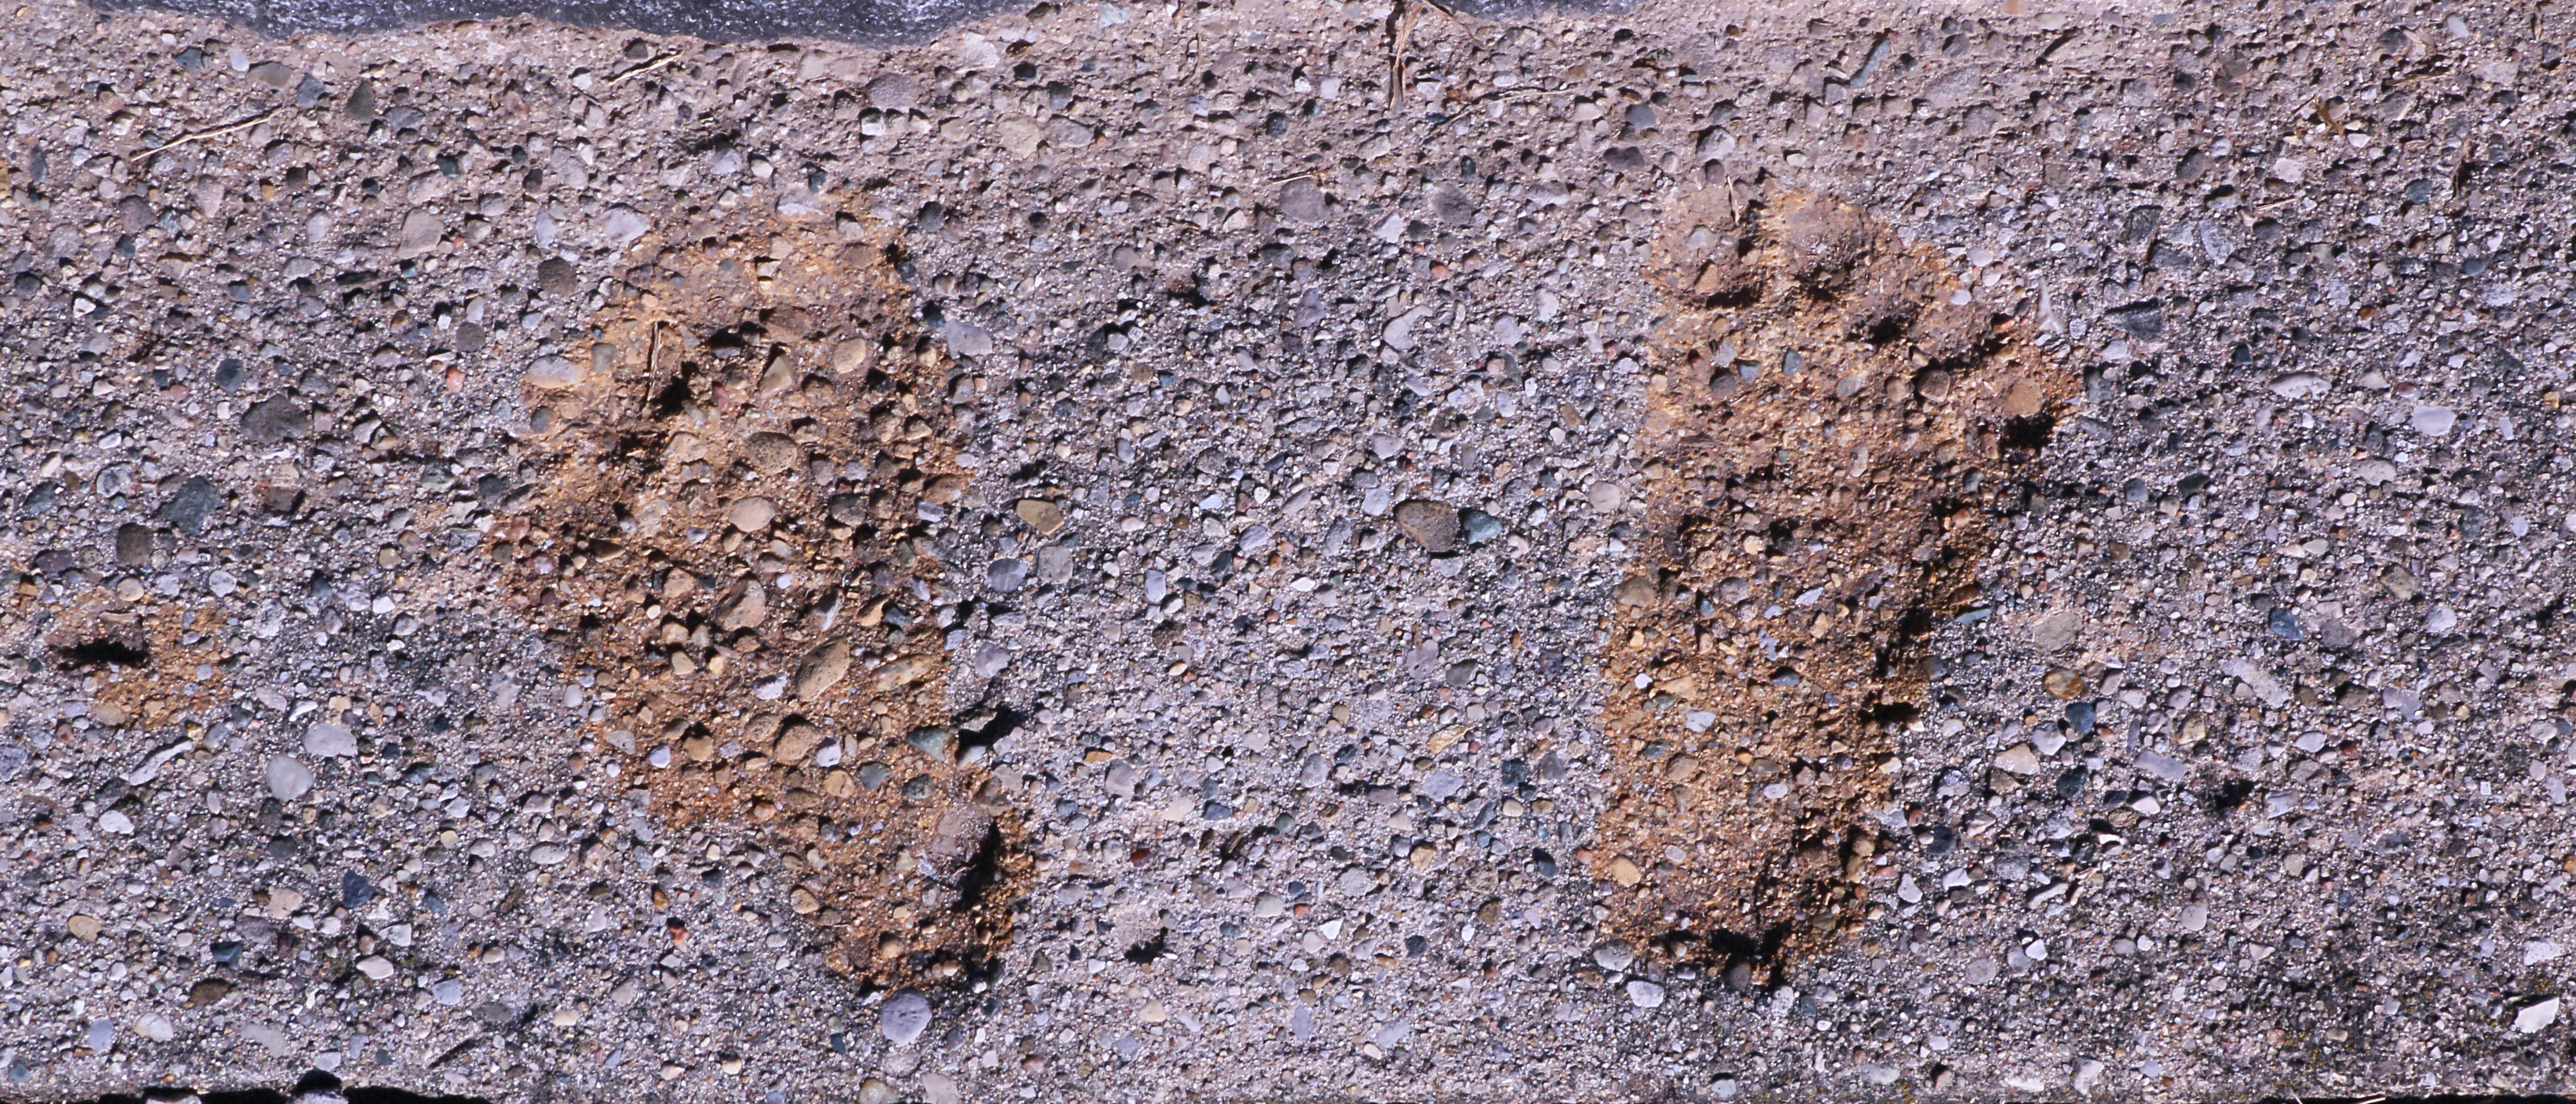 Headstone close-up - Footprints